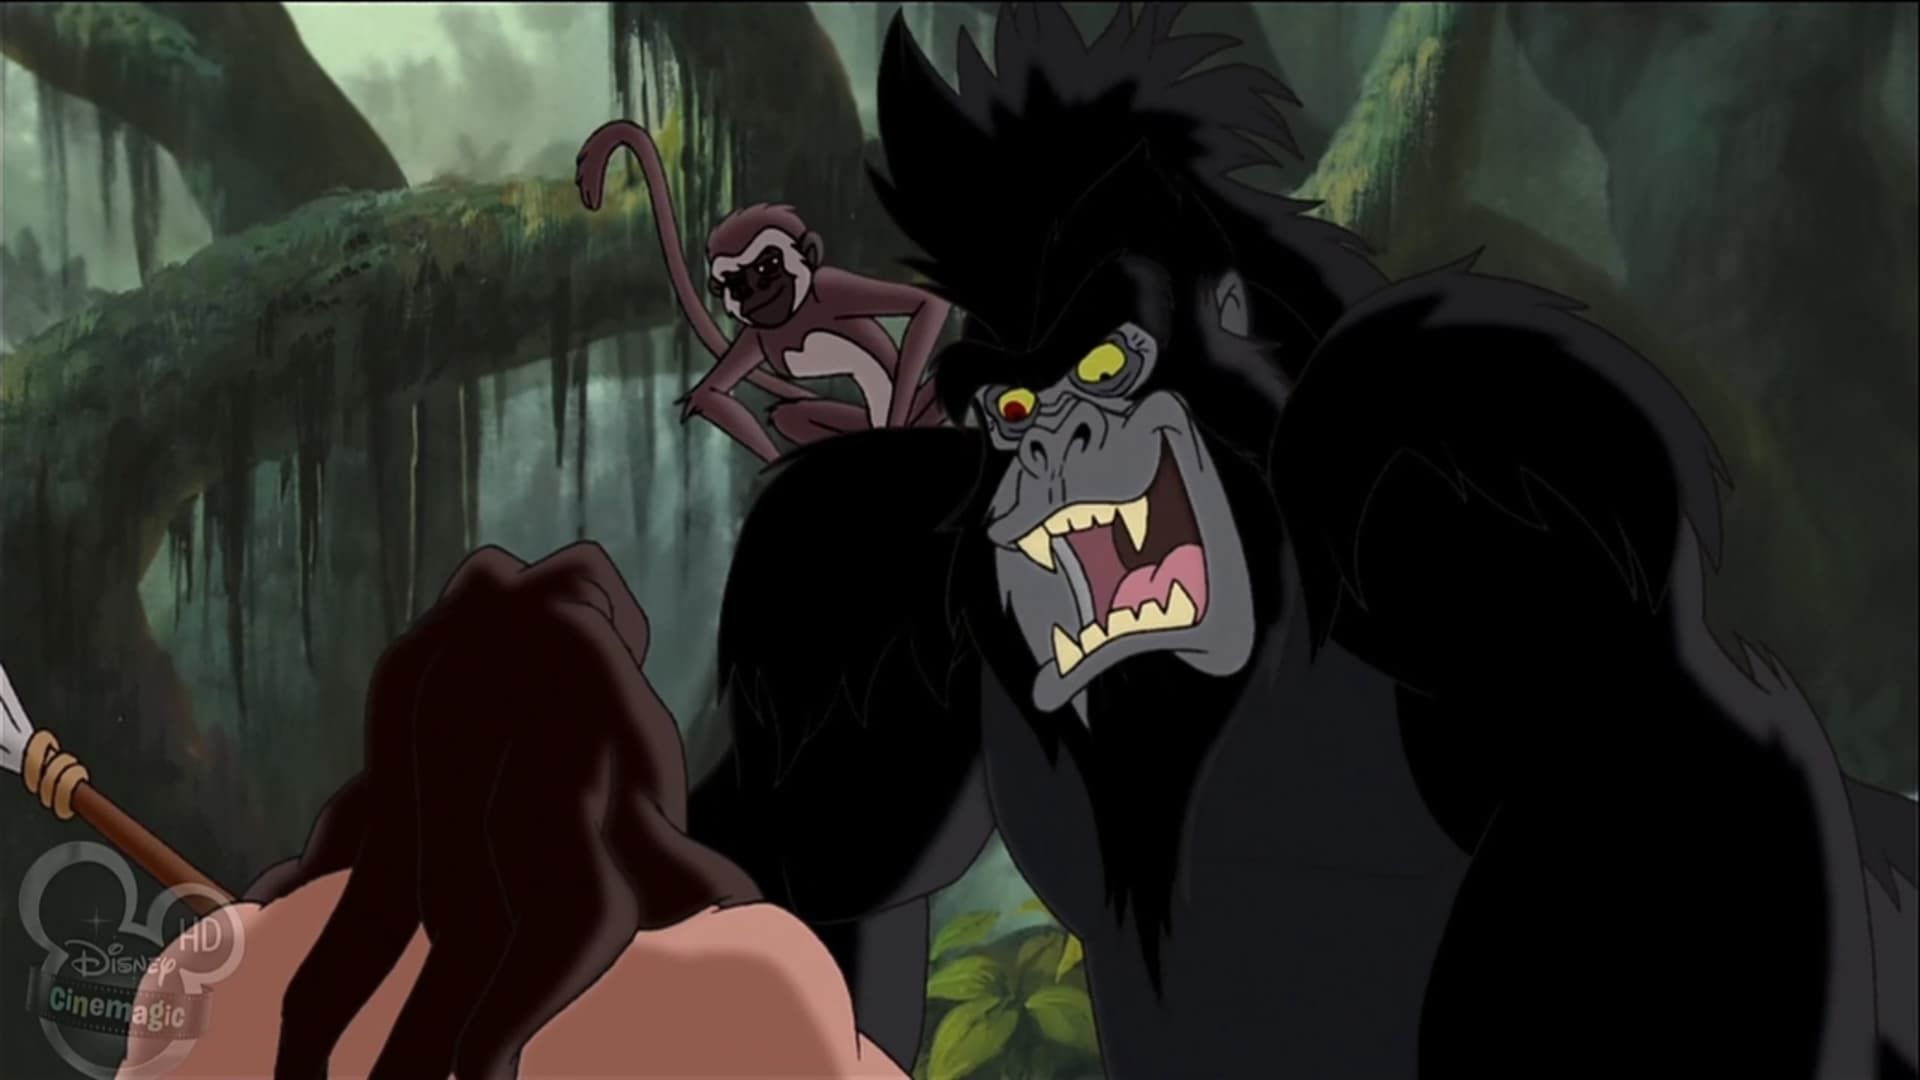 The Legend of Tarzan background